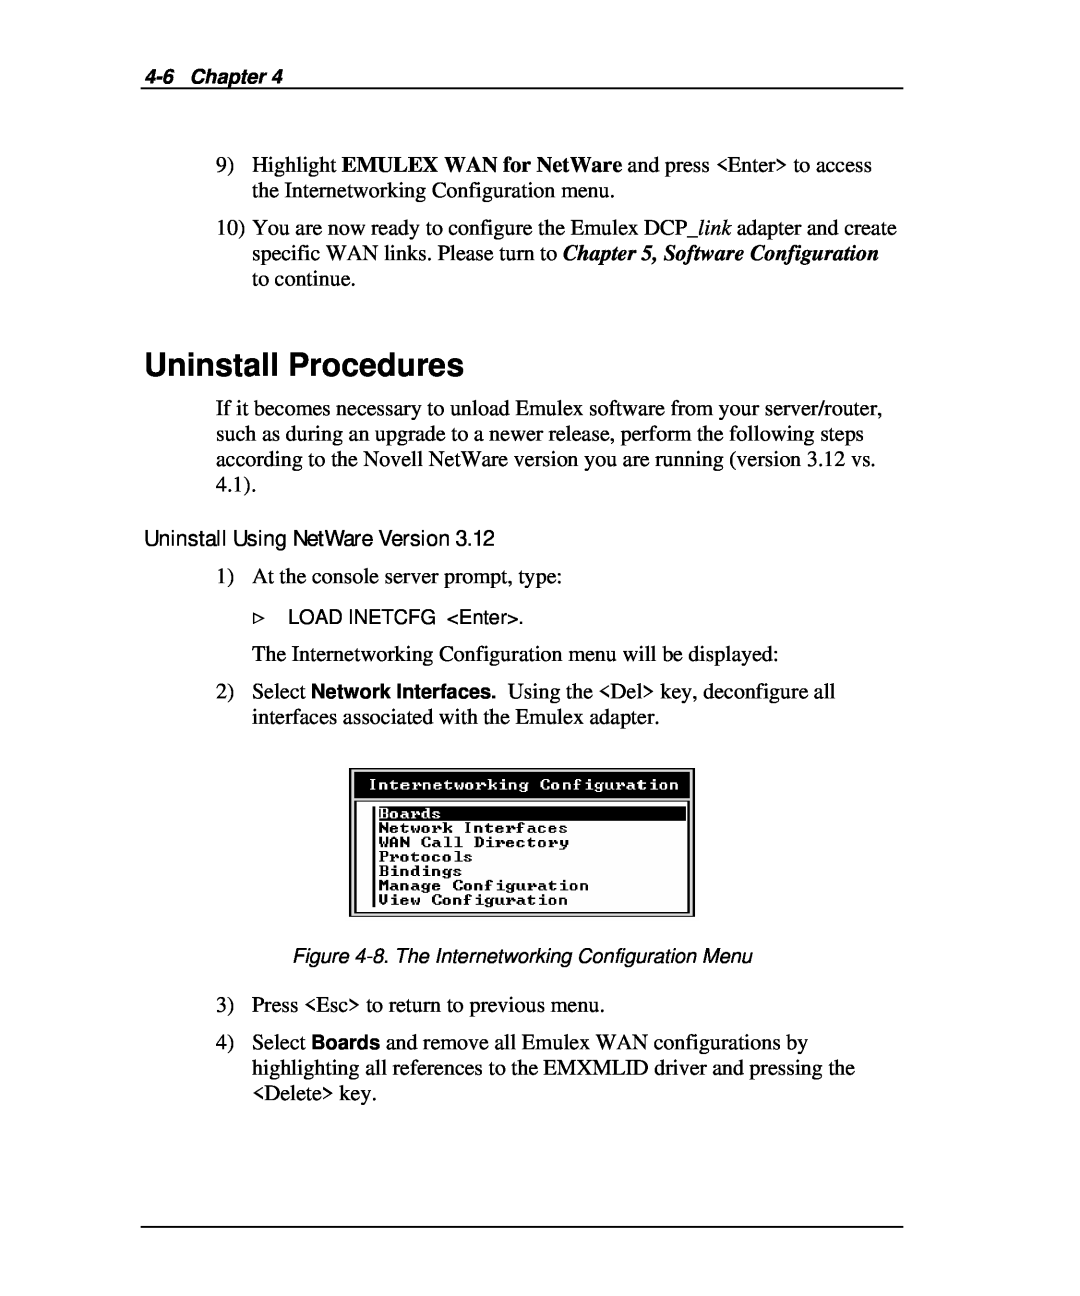 Emulex DCP_link manual Uninstall Procedures, Uninstall Using NetWare Version 